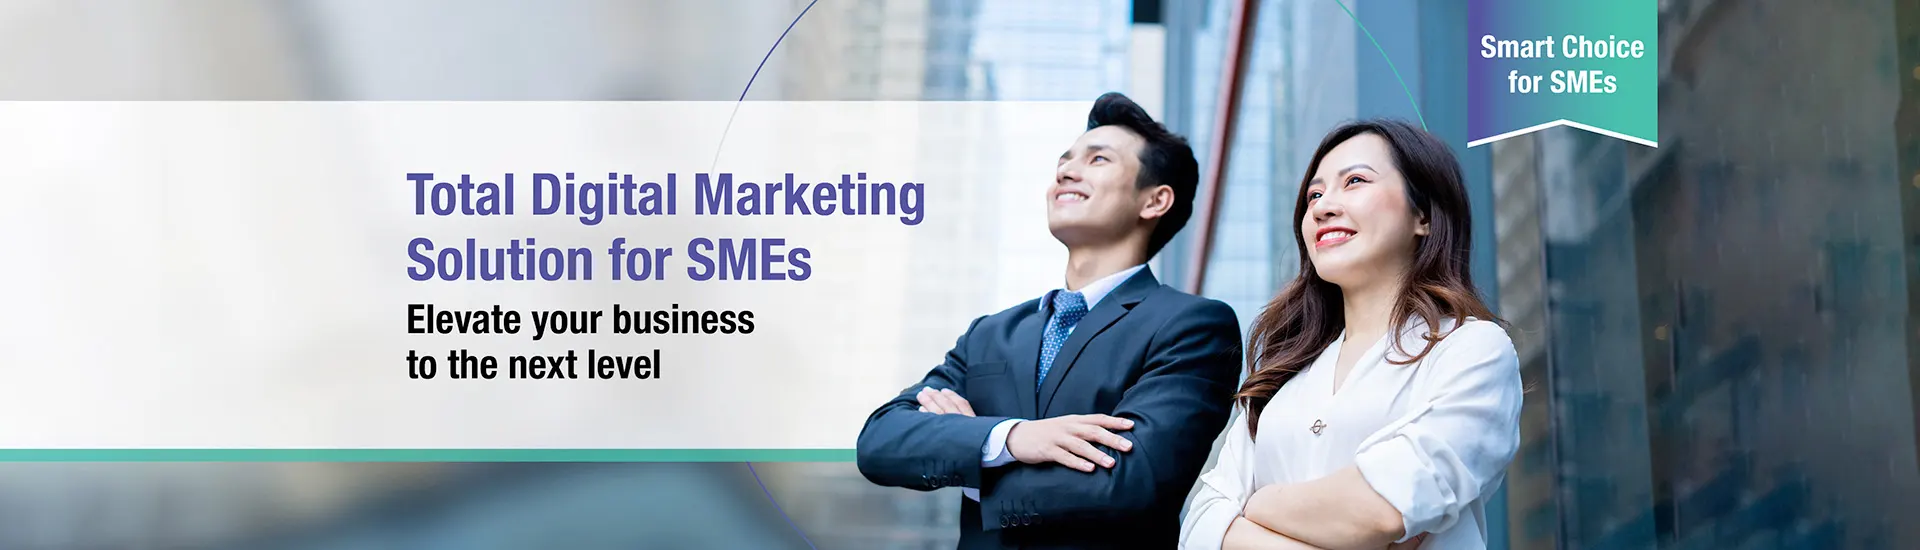 Total Digital Marketing Solution for SMEs